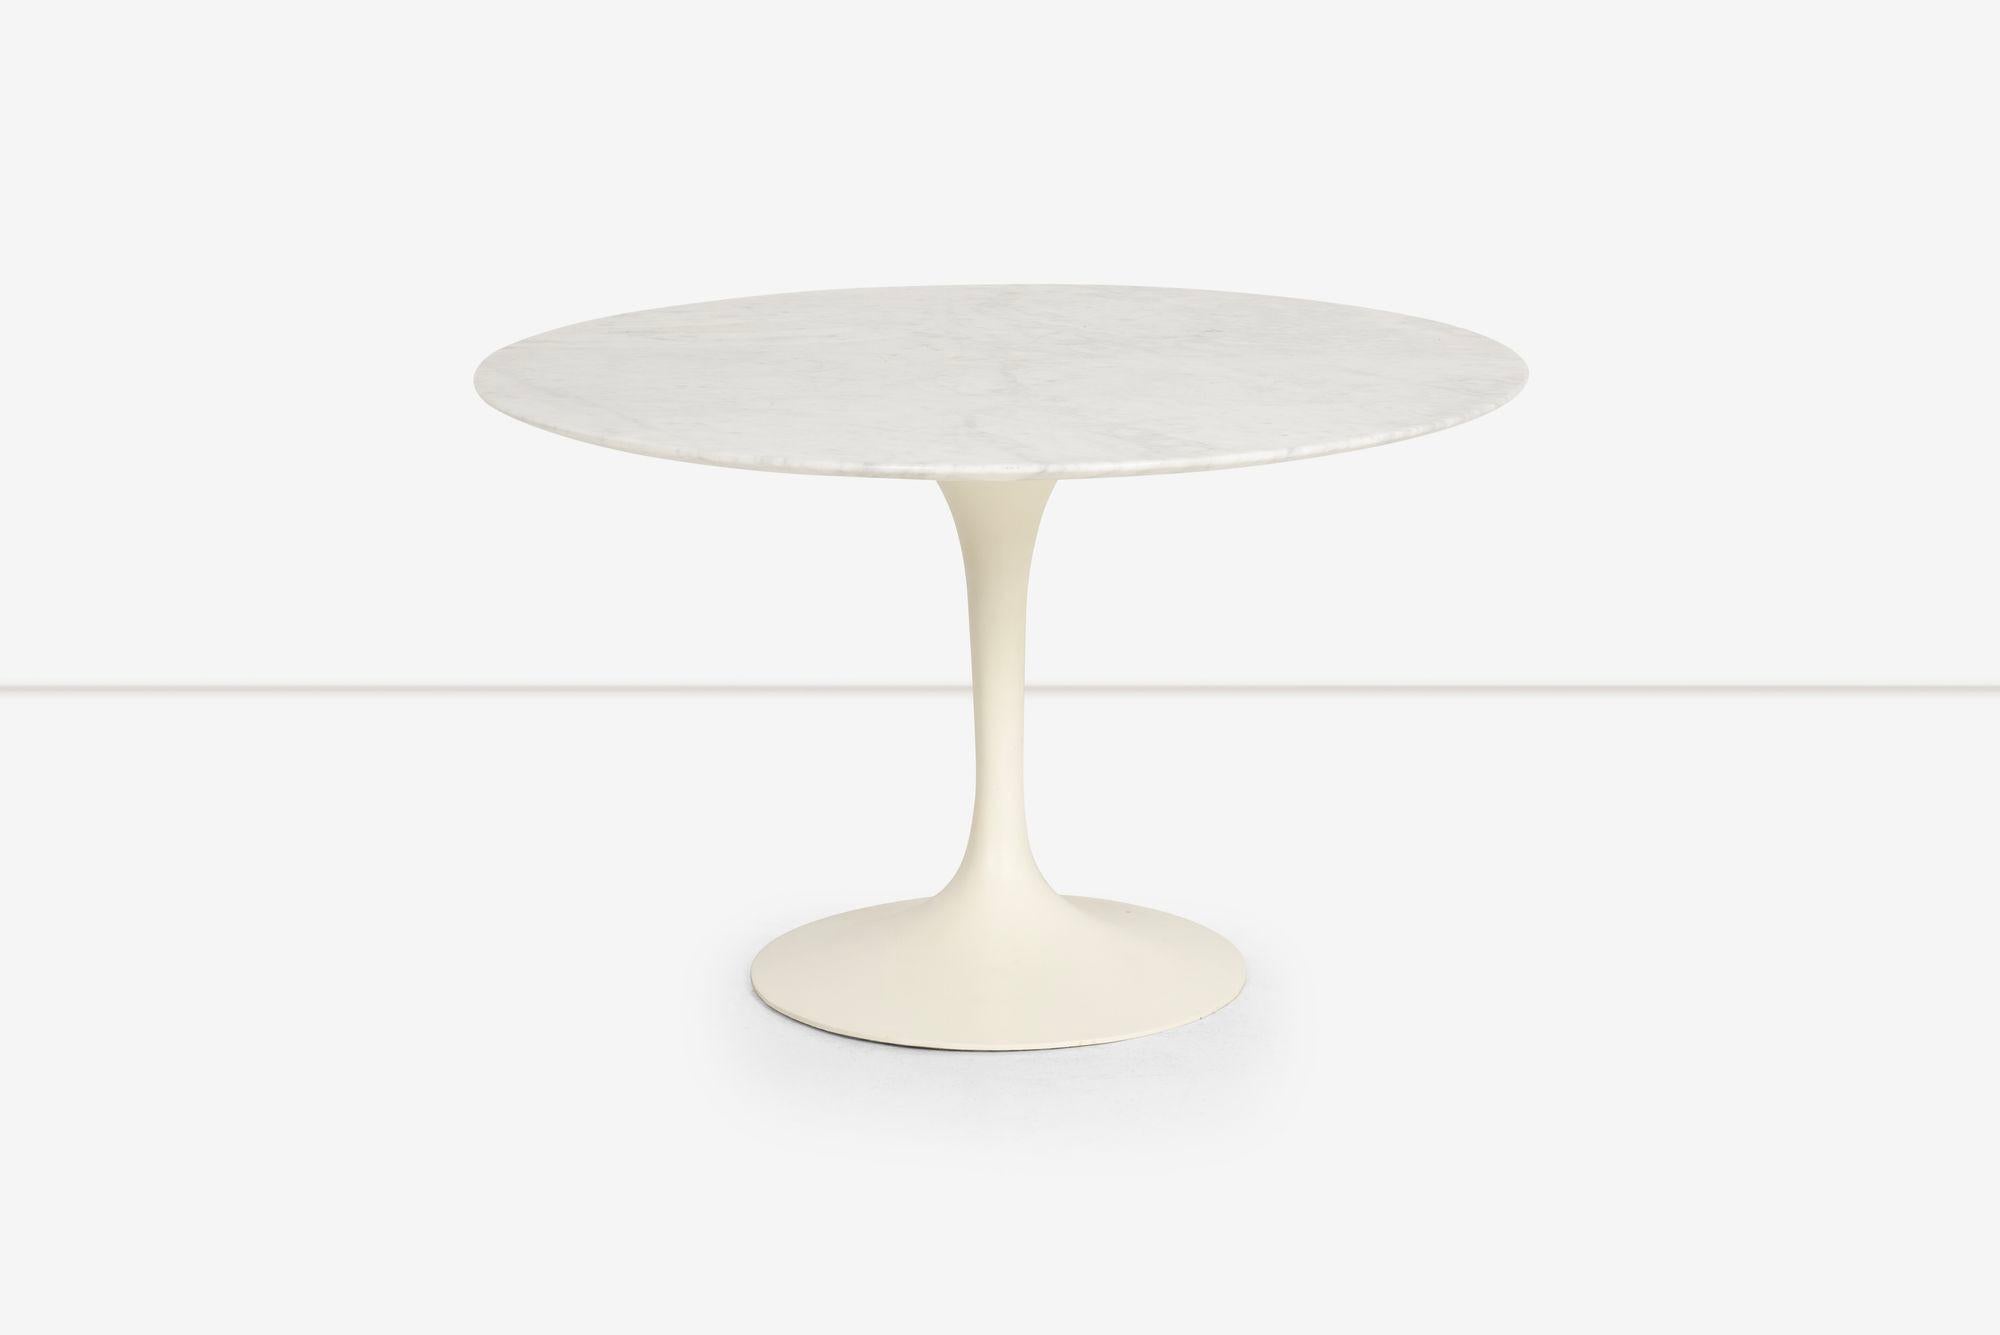 Early Vintage Eero Saarinen Tulip Table, Carrara Marble For Sale 2